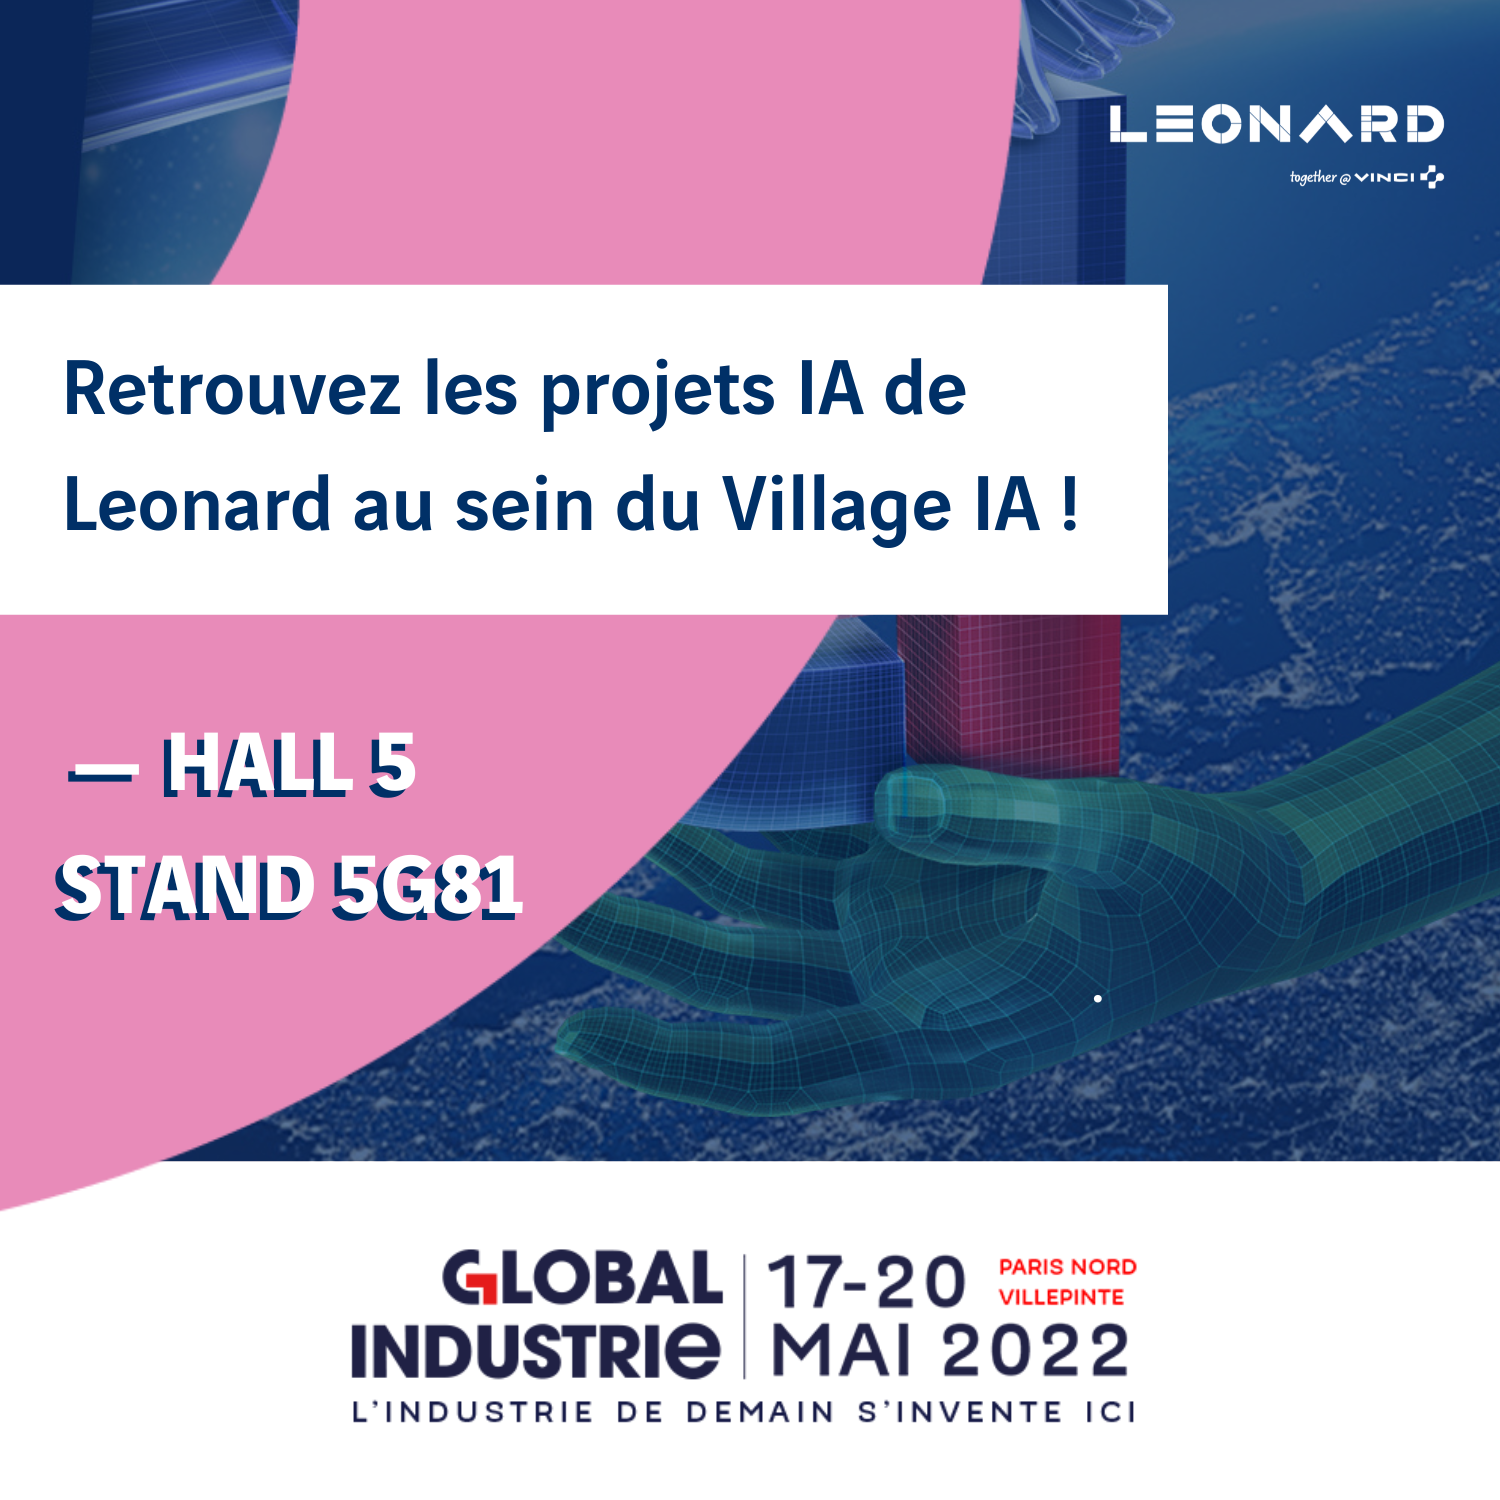 Global Industrie Leonard